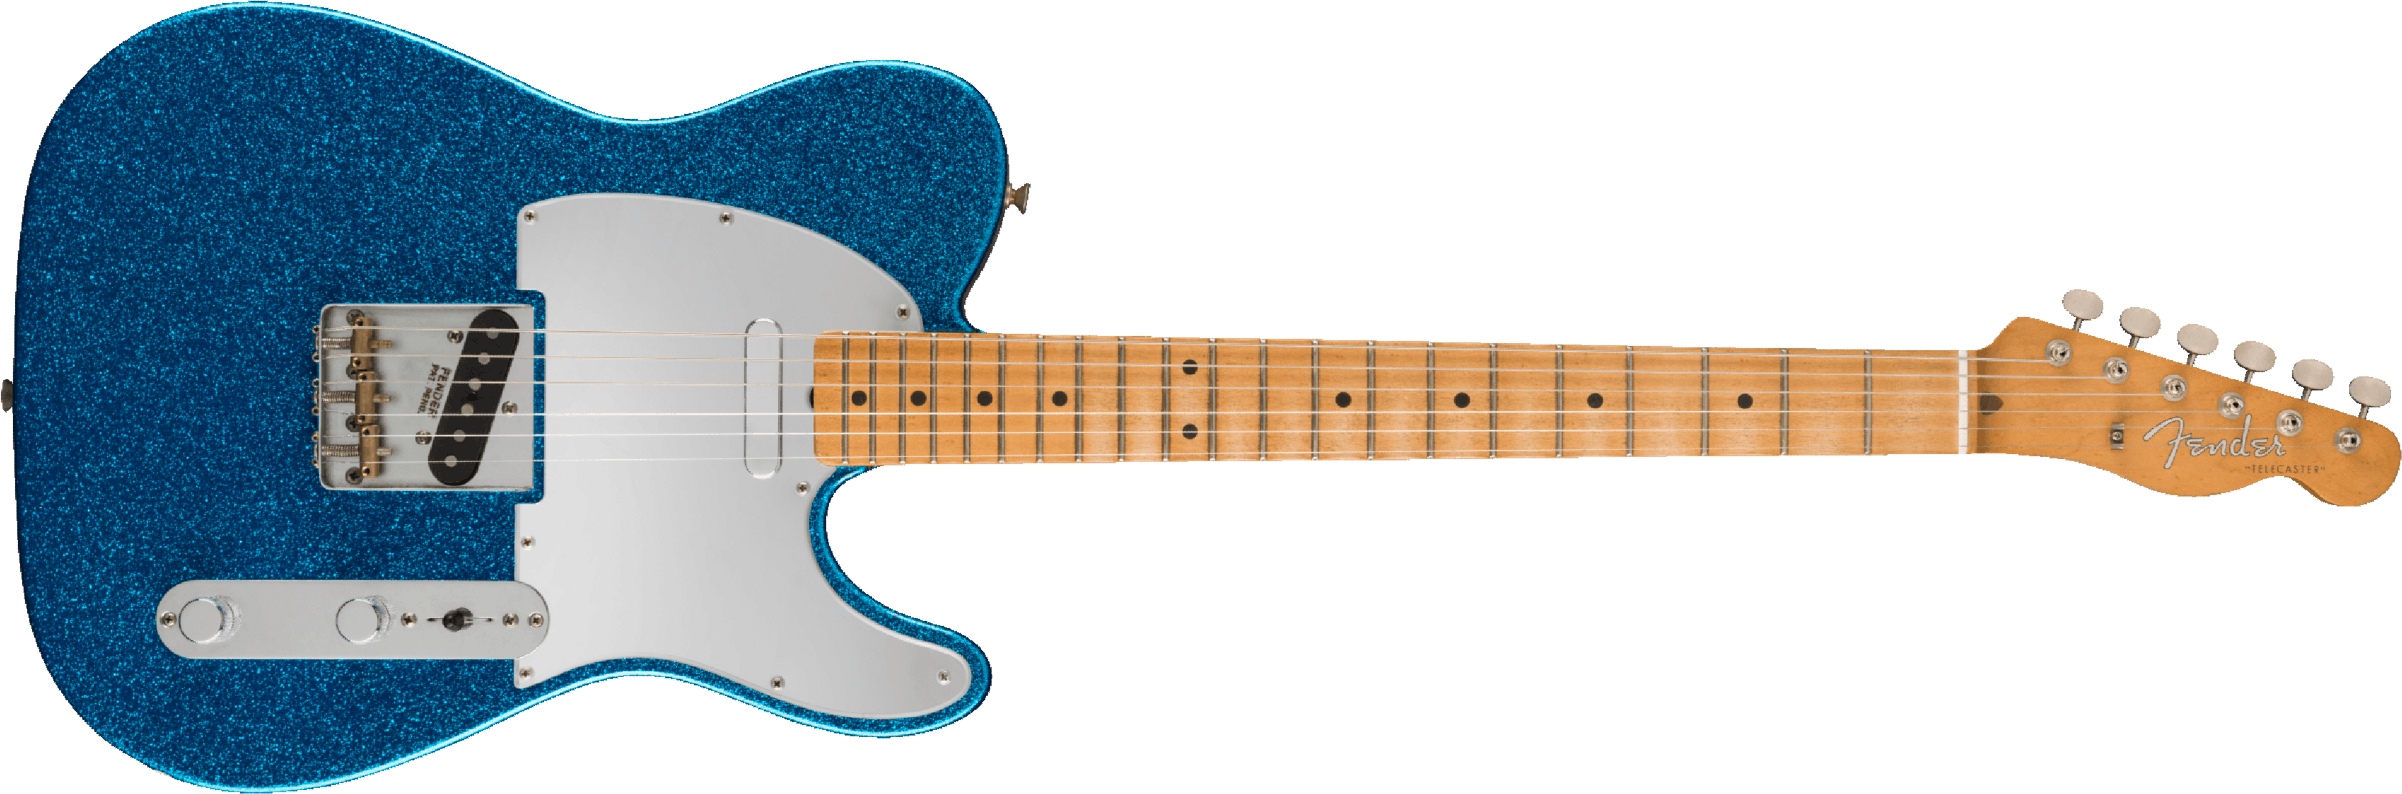 Fender Telecaster J. Mascis Signature 2s Ht Mn - Sparkle Blue - Televorm elektrische gitaar - Main picture